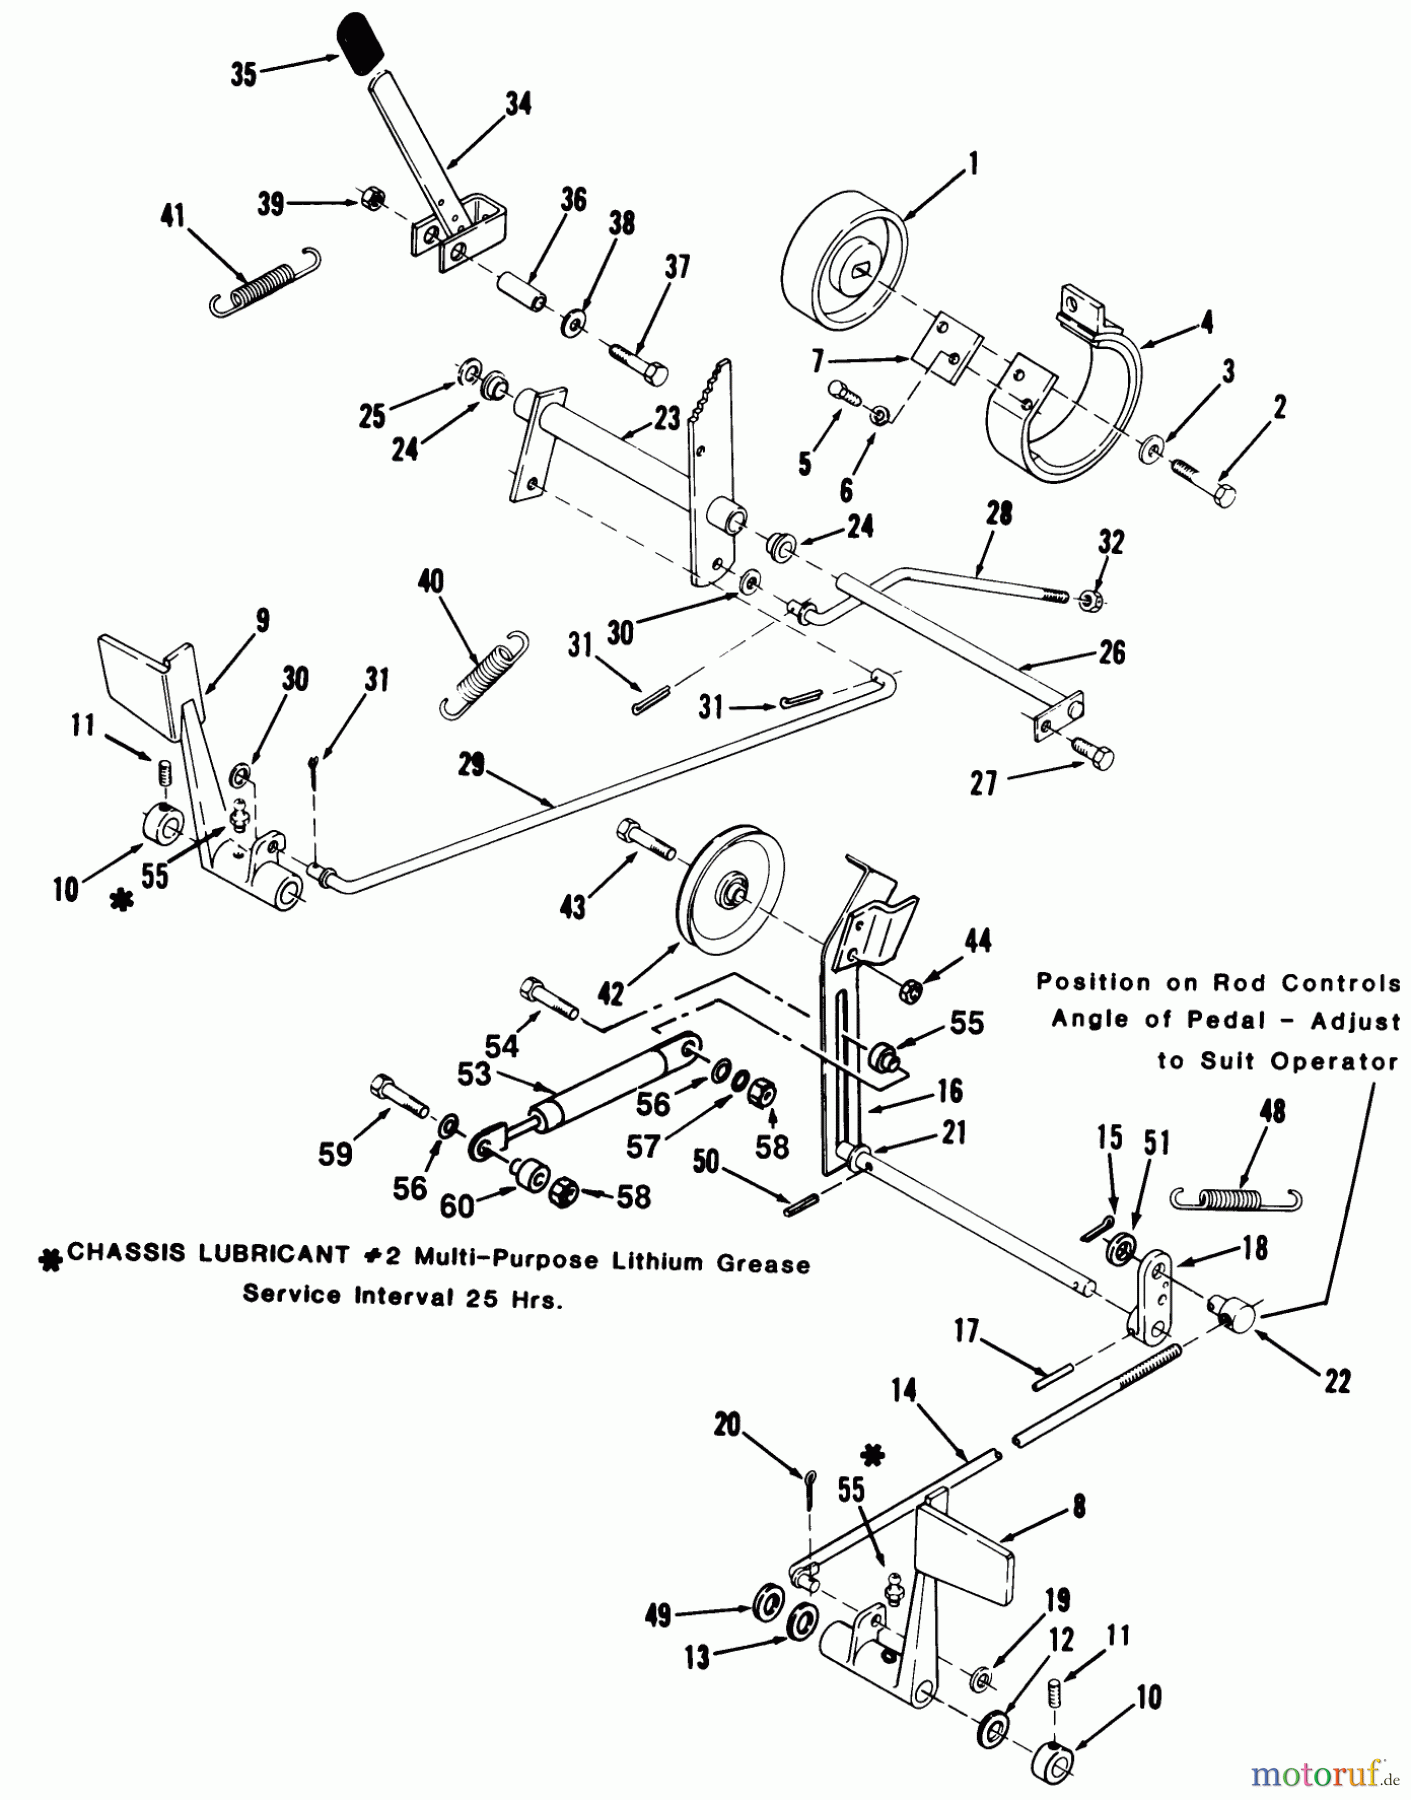  Toro Neu Mowers, Lawn & Garden Tractor Seite 1 31-12K802 (312-8) - Toro 312-8 Garden Tractor, 1991 (1000001-1999999) CLUTCH, BRAKE AND SPEED CONTROL LINKAGE